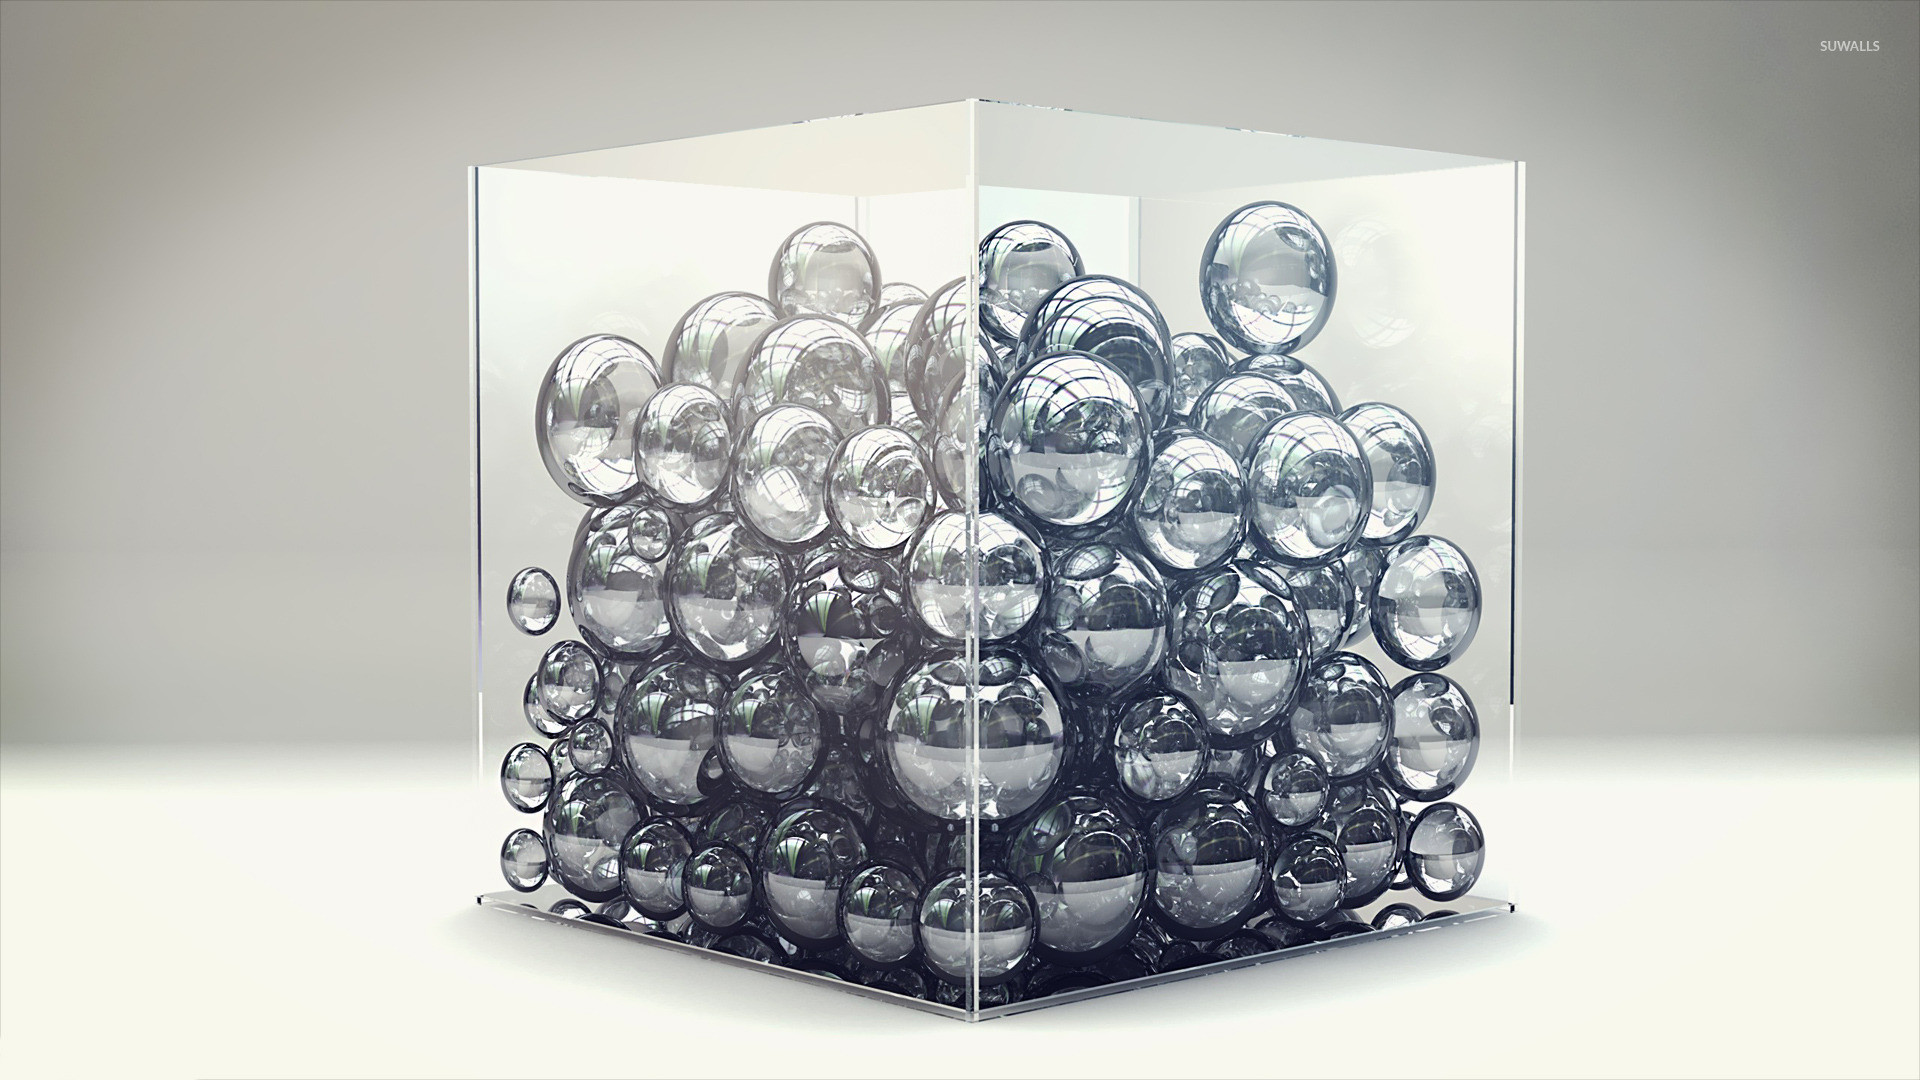 1920x1080 Bubbles in a cube wallpaper